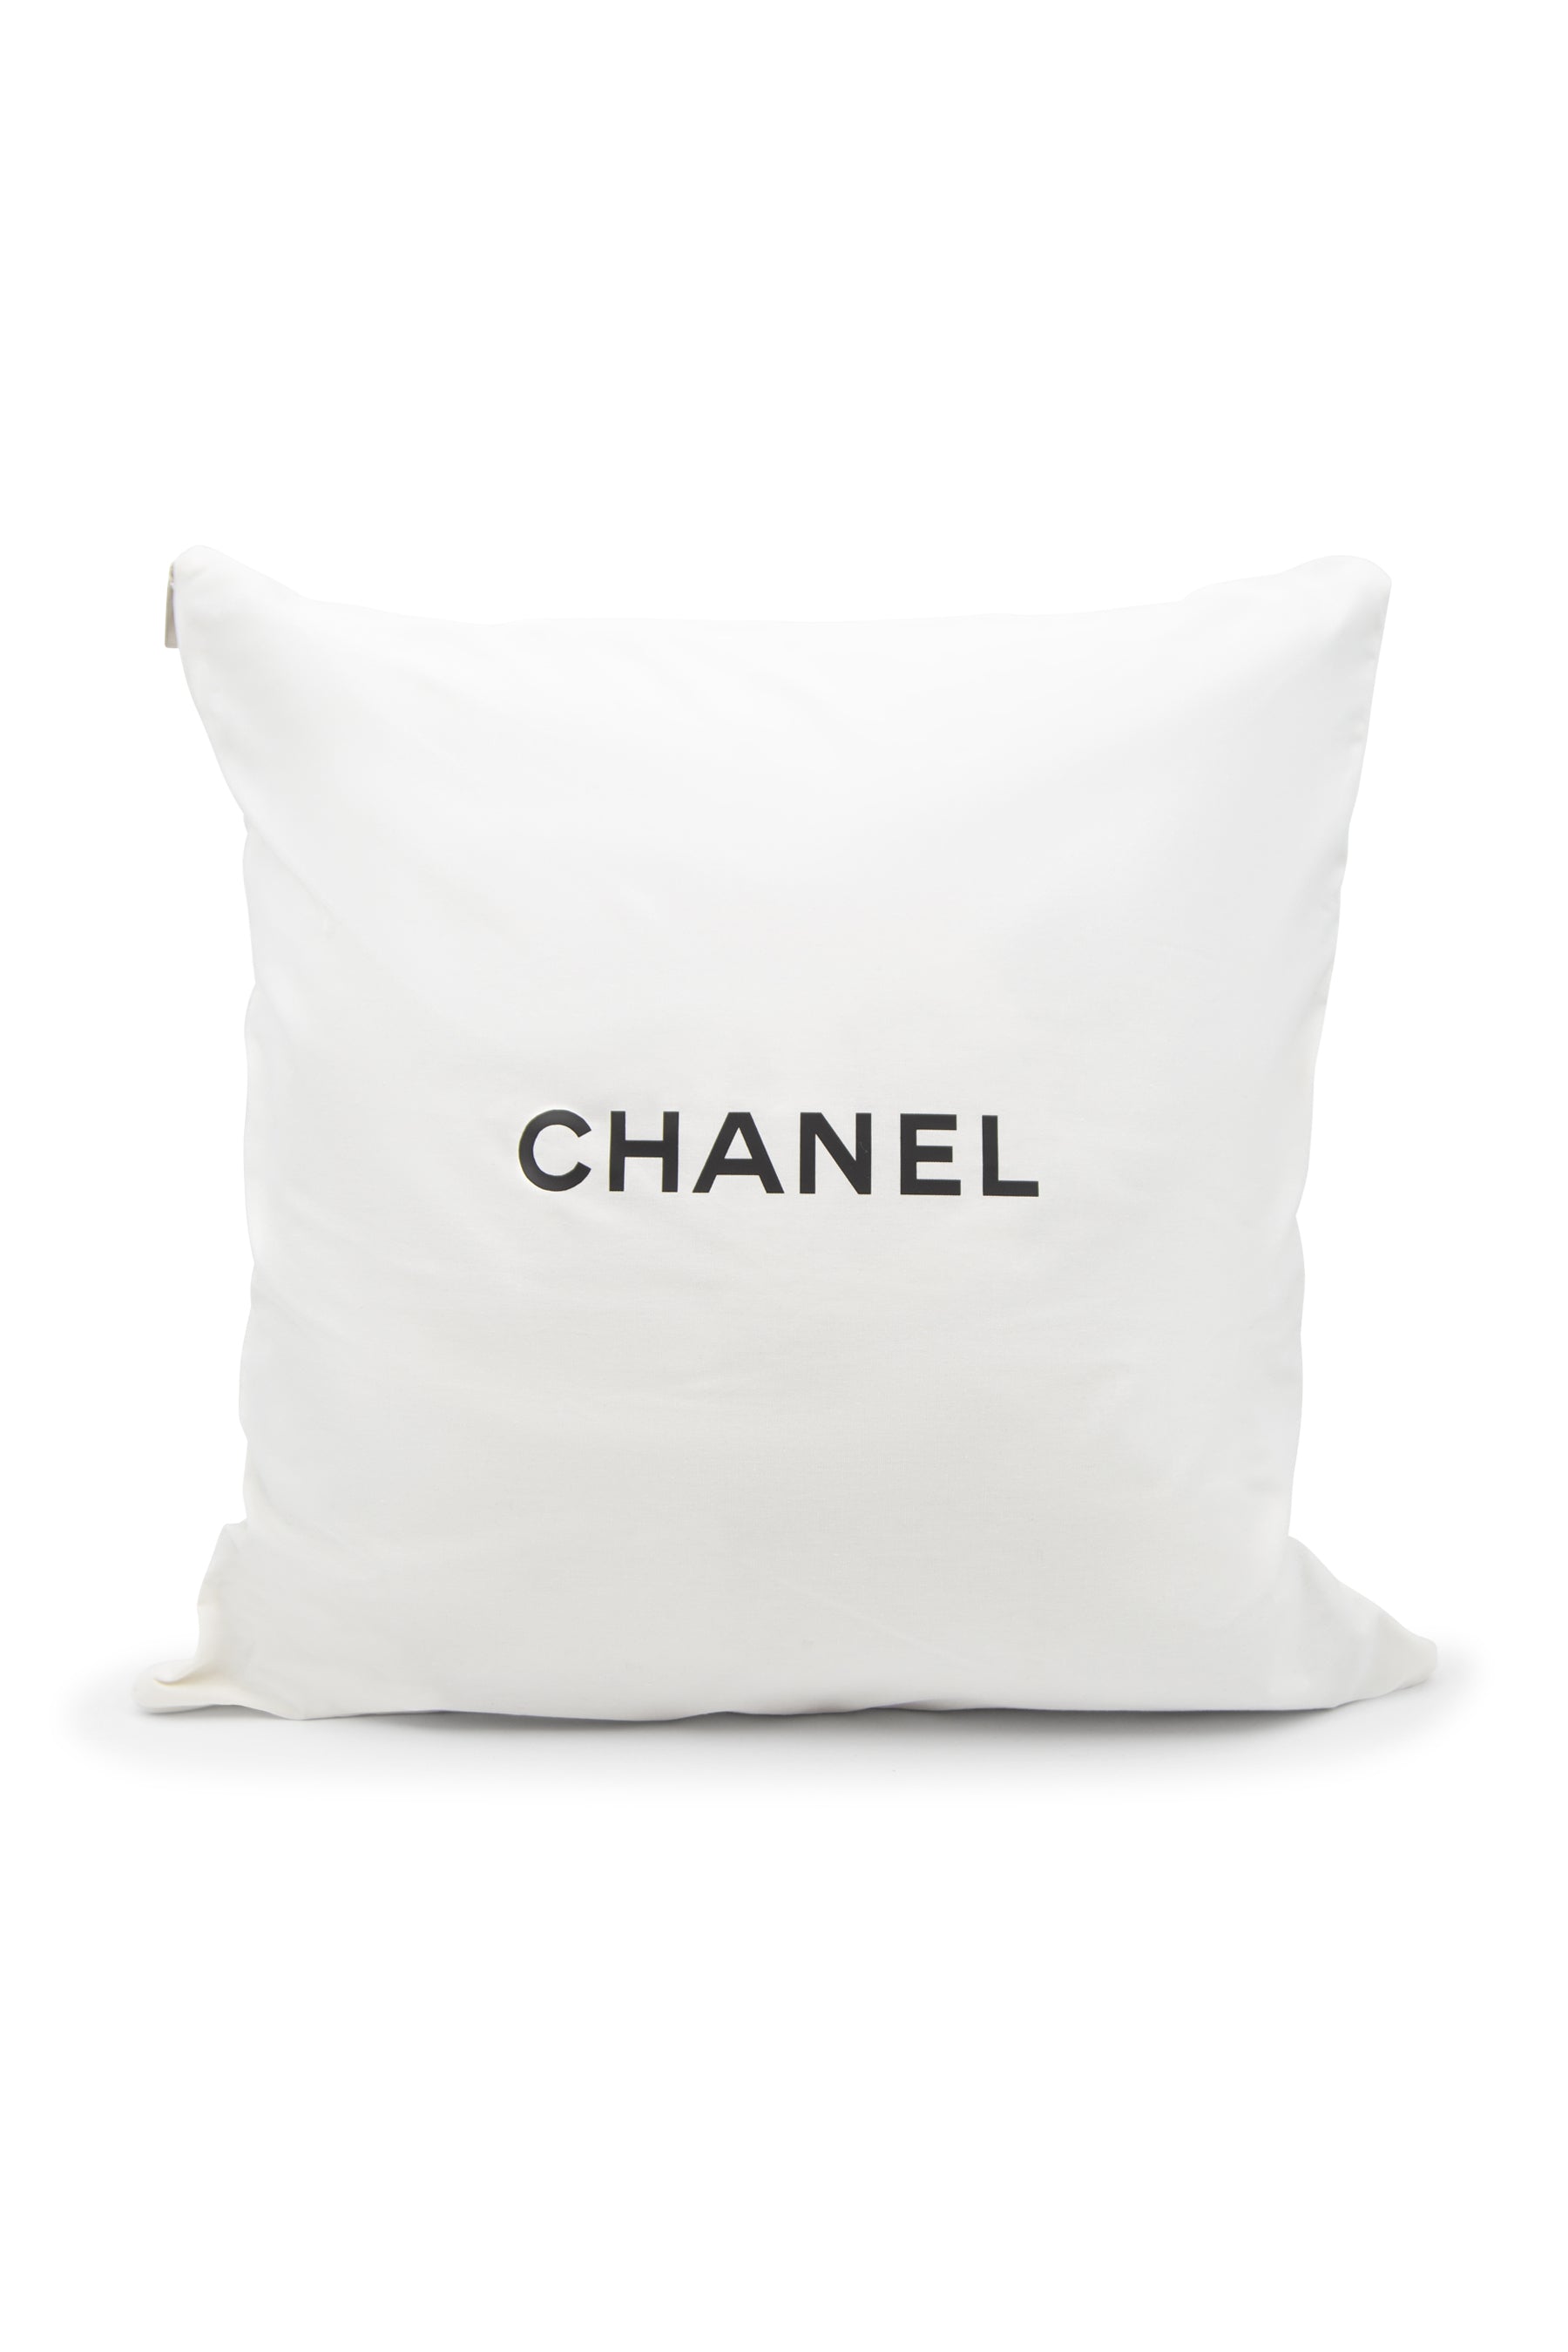 Chanel Logo Throw Pillow – Dora Maar